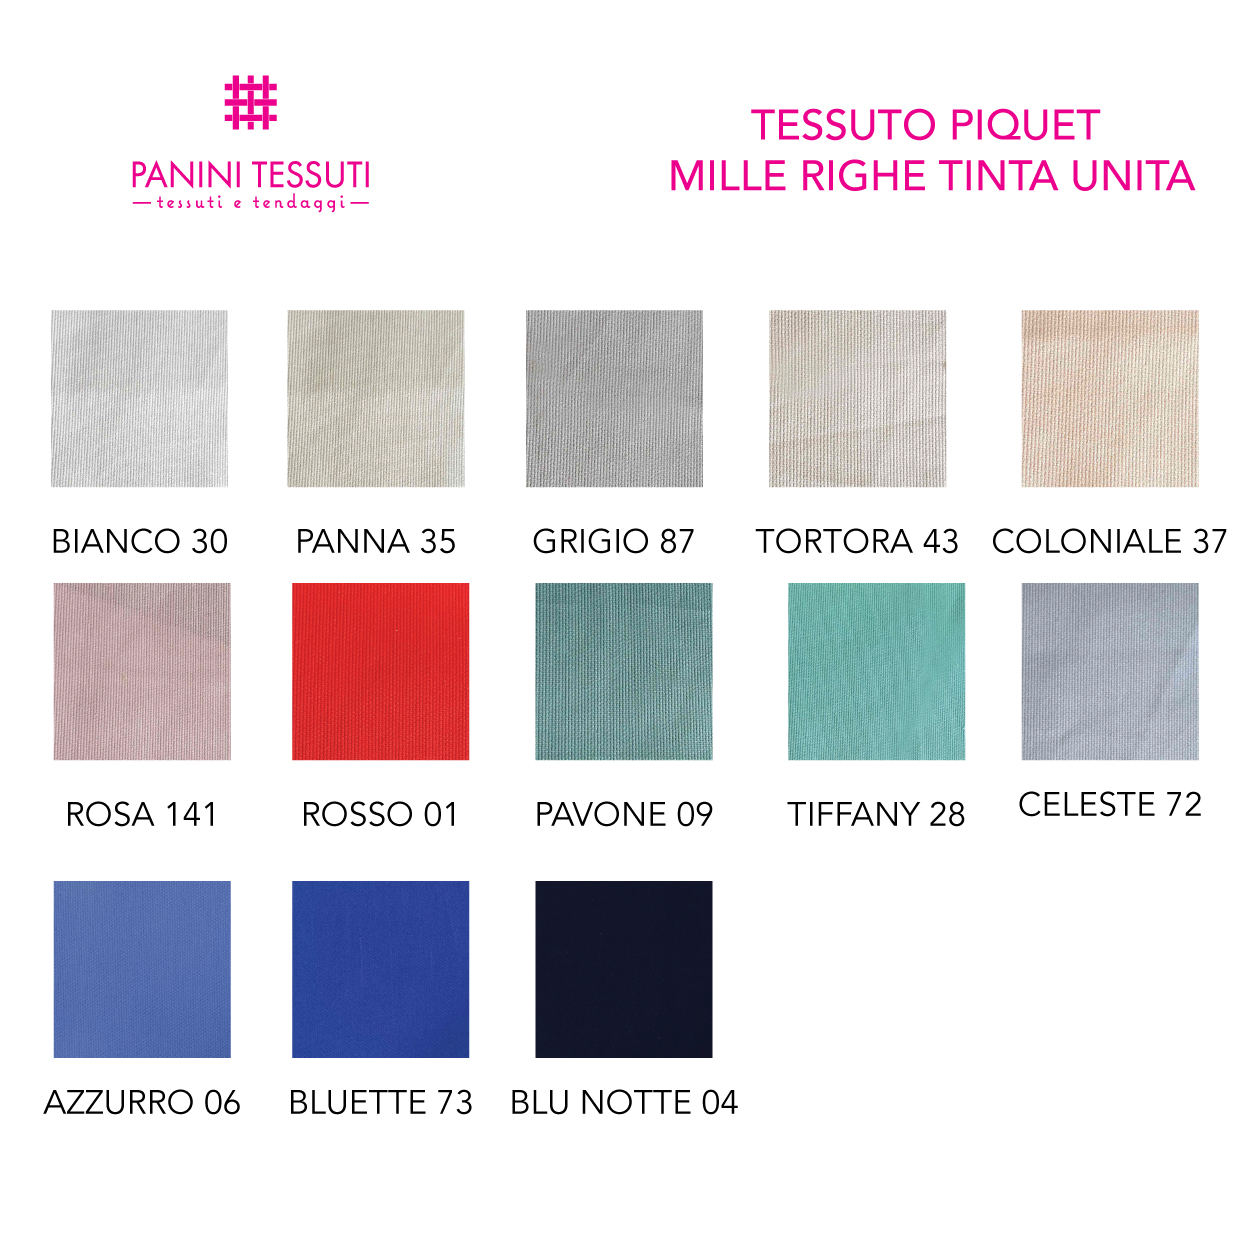 Tessuto Piquet Millerighe Tinta Unita MAG (6)